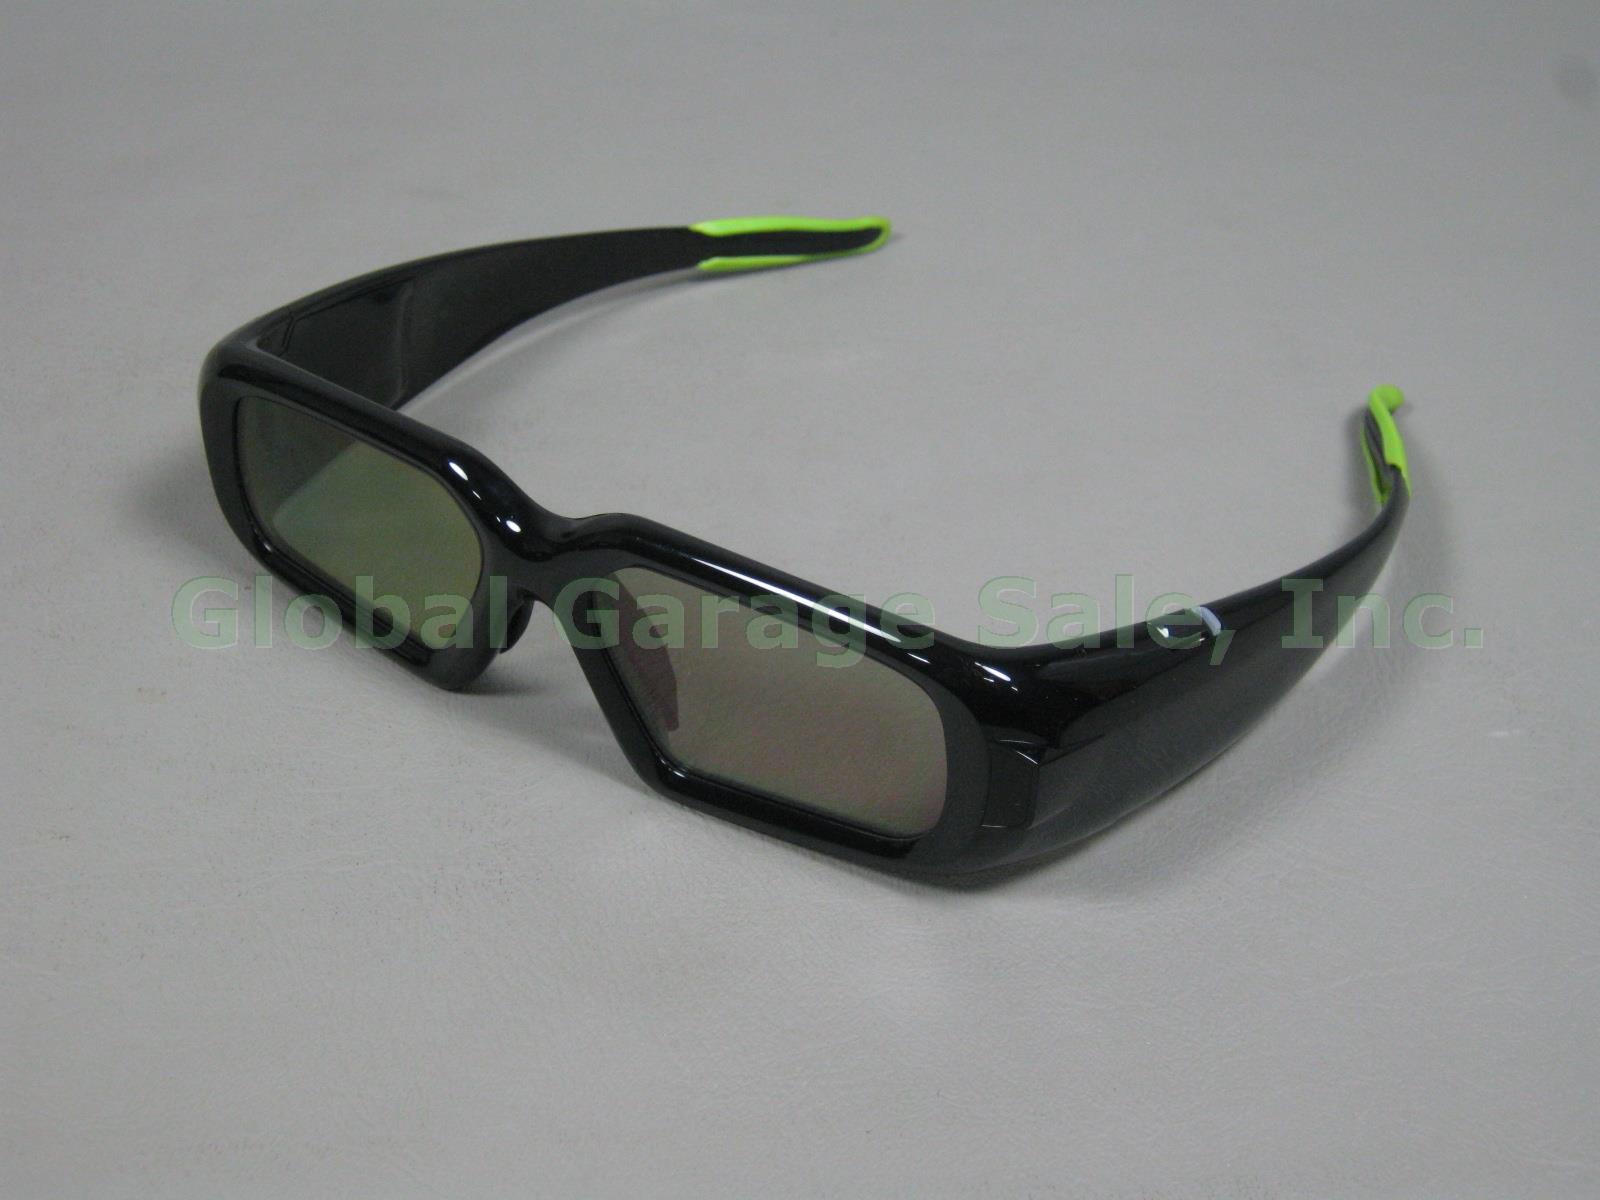 Nvidia GeForce 3D Vision Wireless Active Shutter Glasses Kit P854 W/ IR Emitter 1